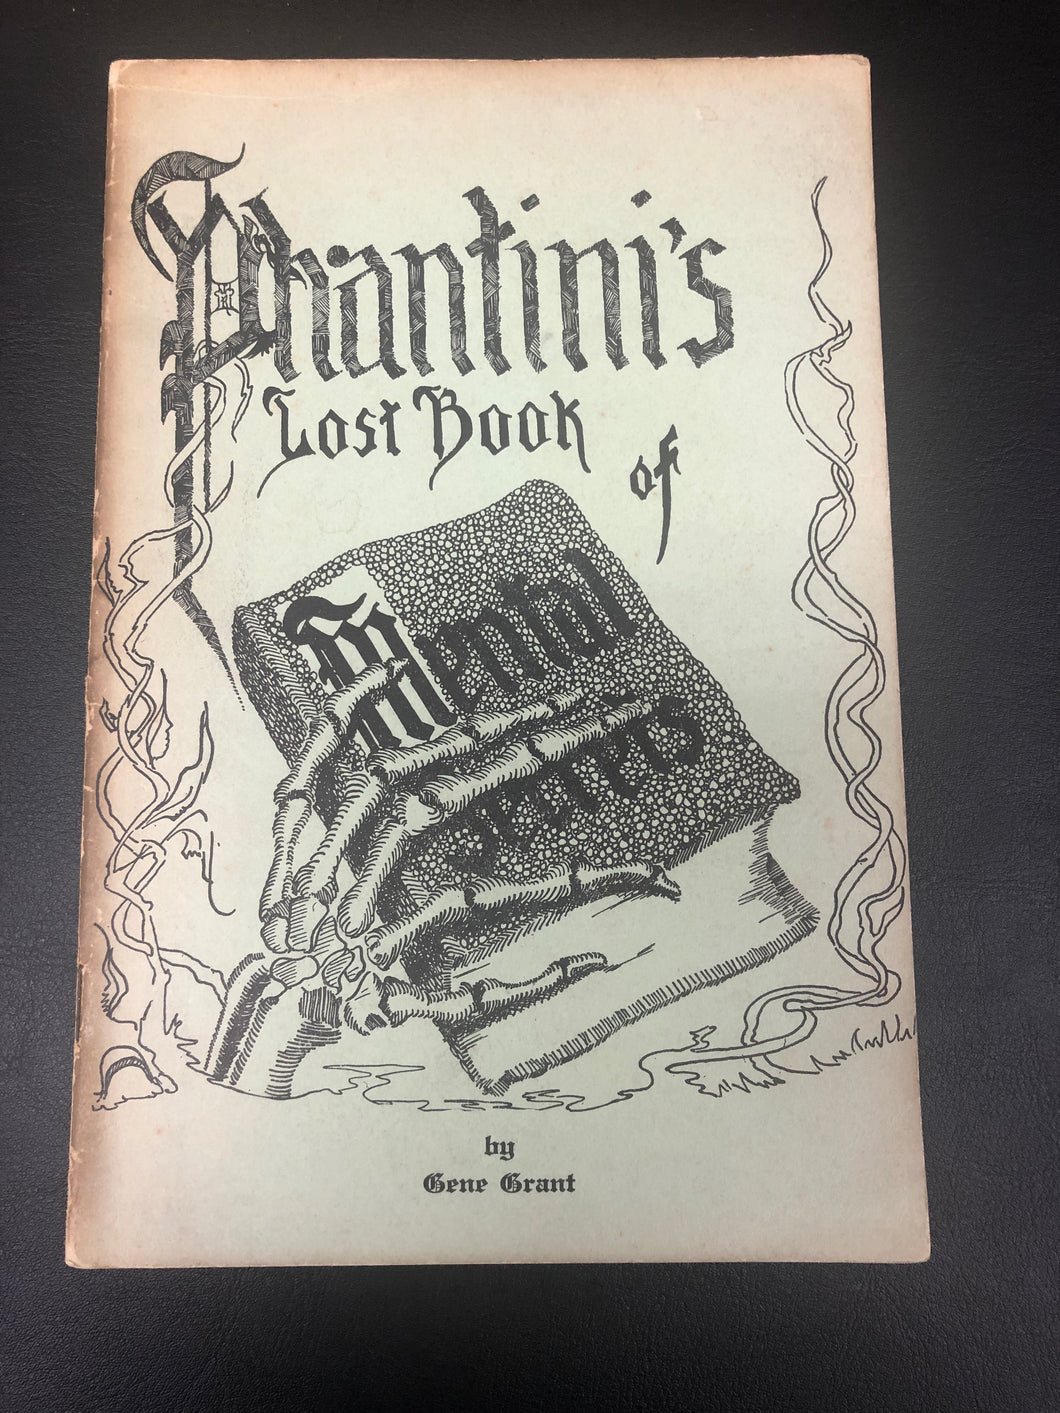 Phantini's Lost Book of Mental Secrets by Gene Grant